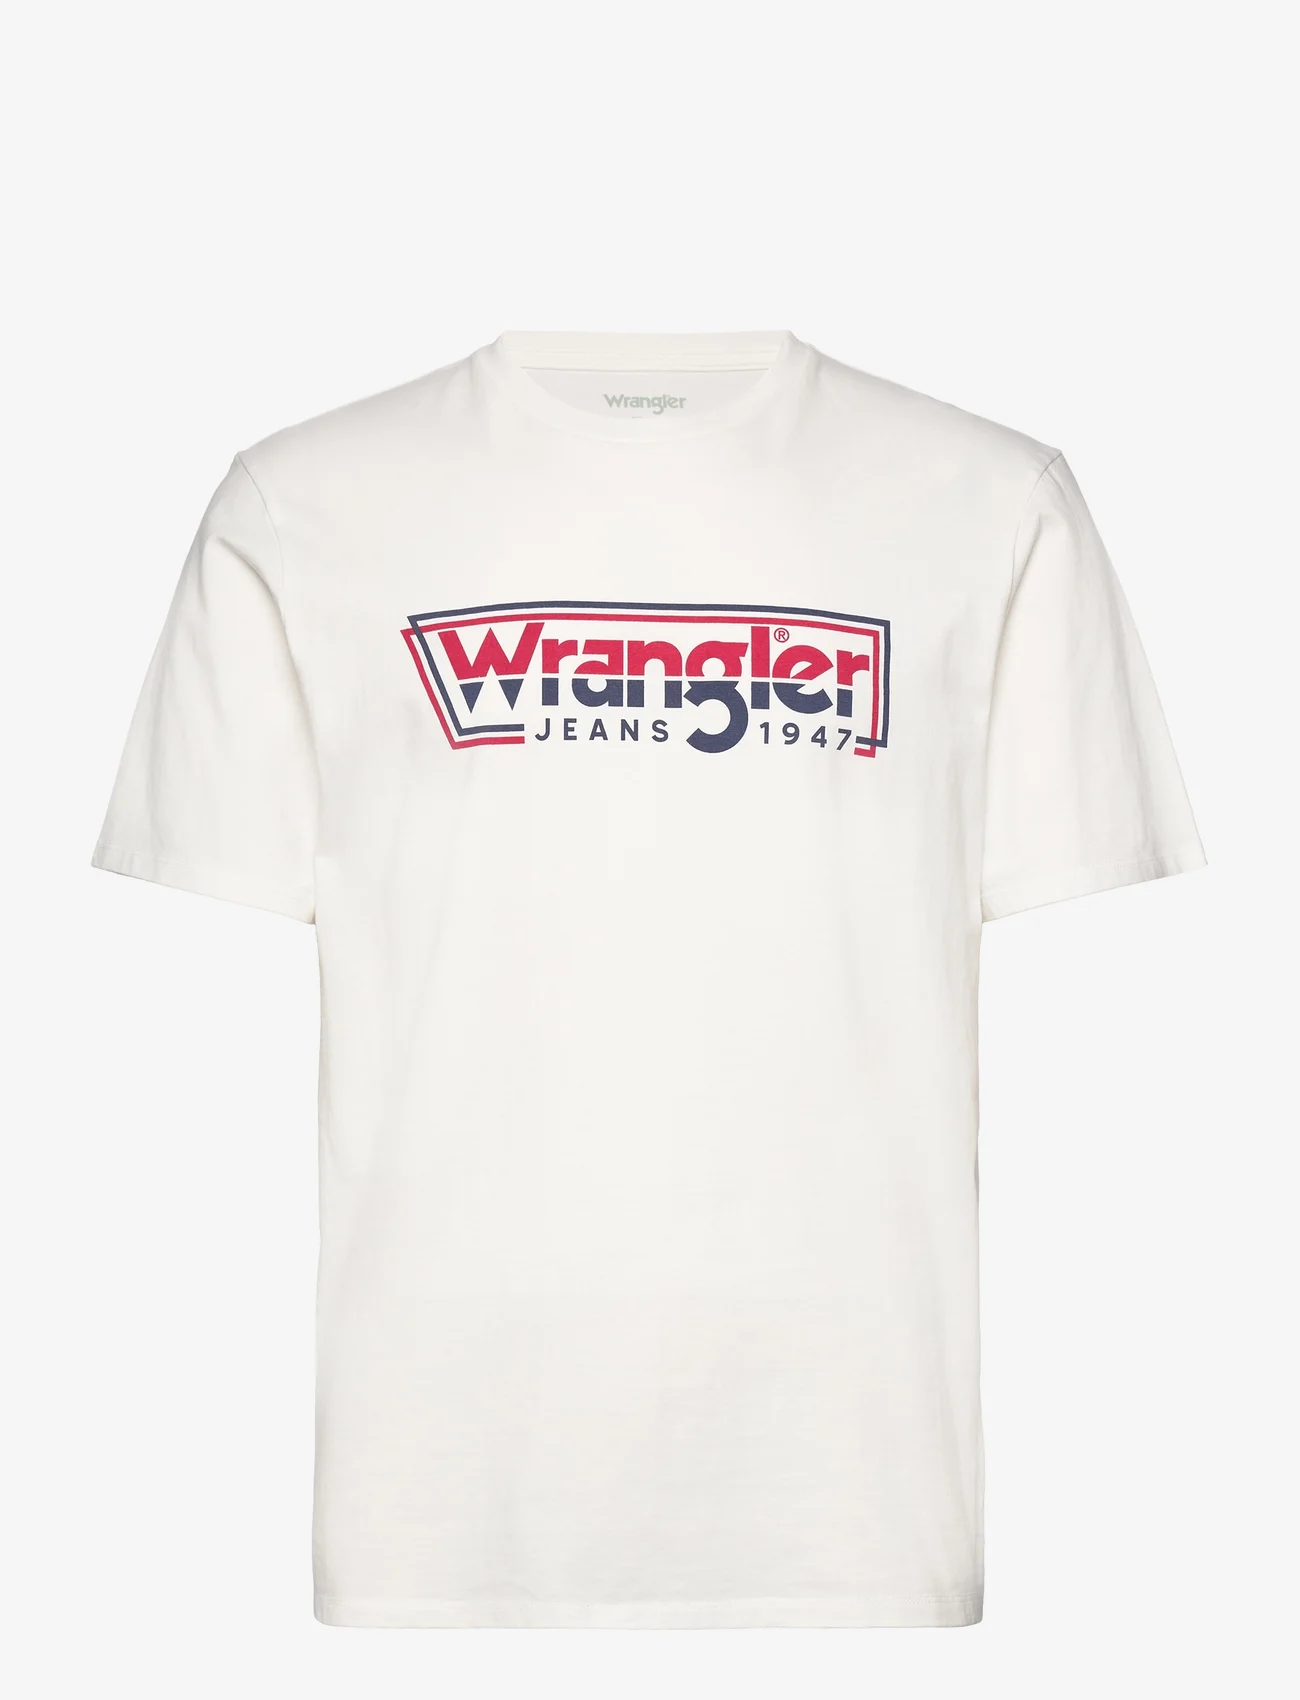 Wrangler - GRAPHIC TEE - lowest prices - worn white - 0